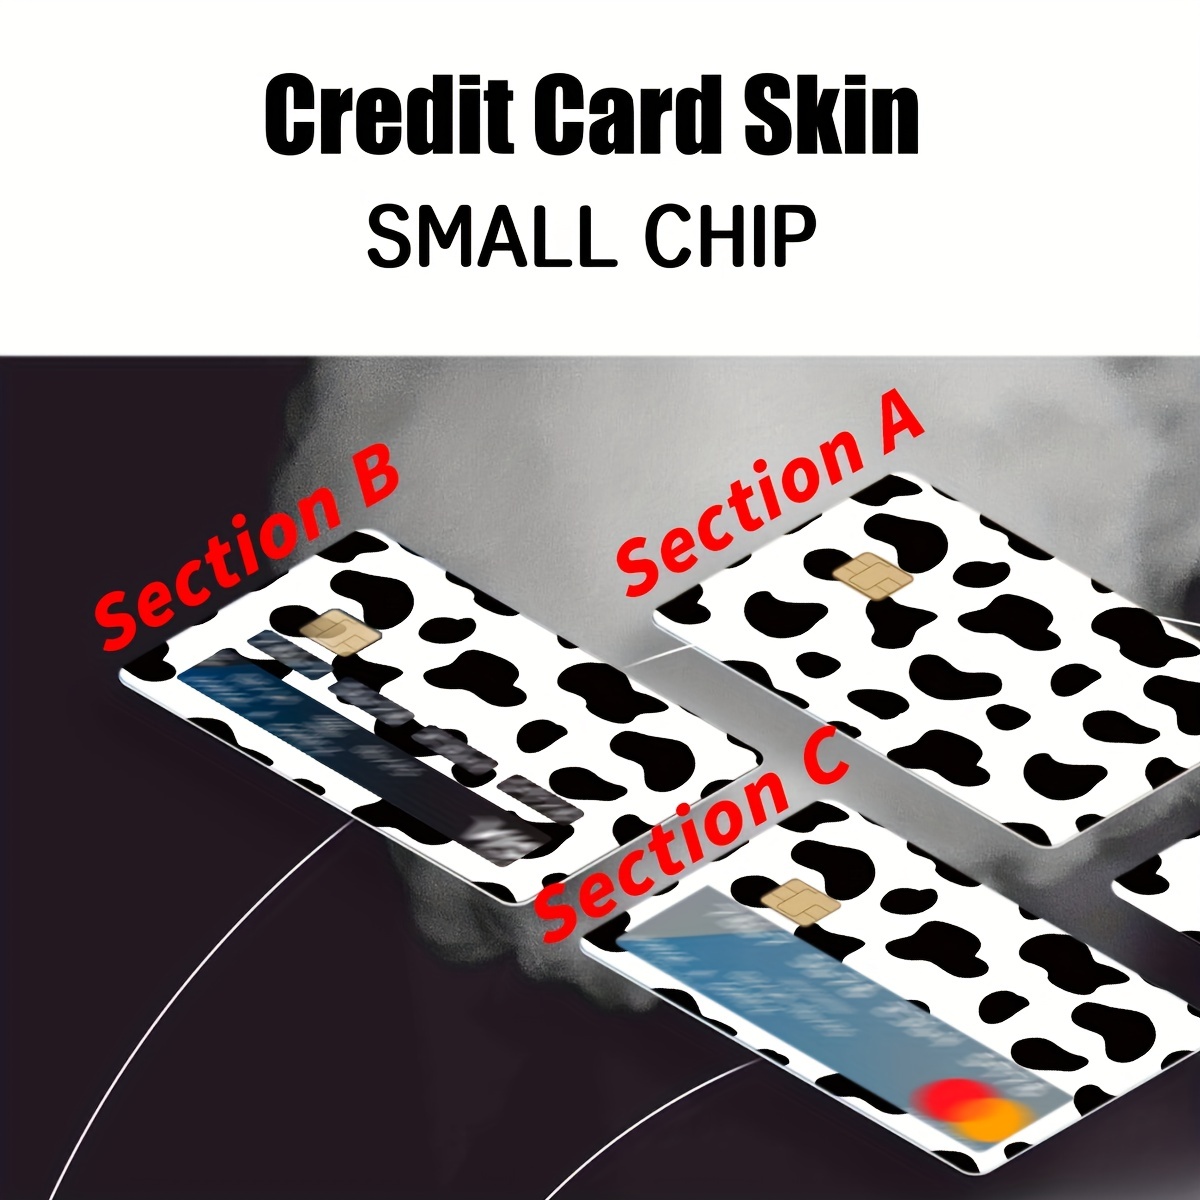 4pcs Scratch-resistant Card Covers Skin With Mushroom Christmas Snowflake  Socks, Vinyl Waterproof Card Cover For Credit Card Debit Card